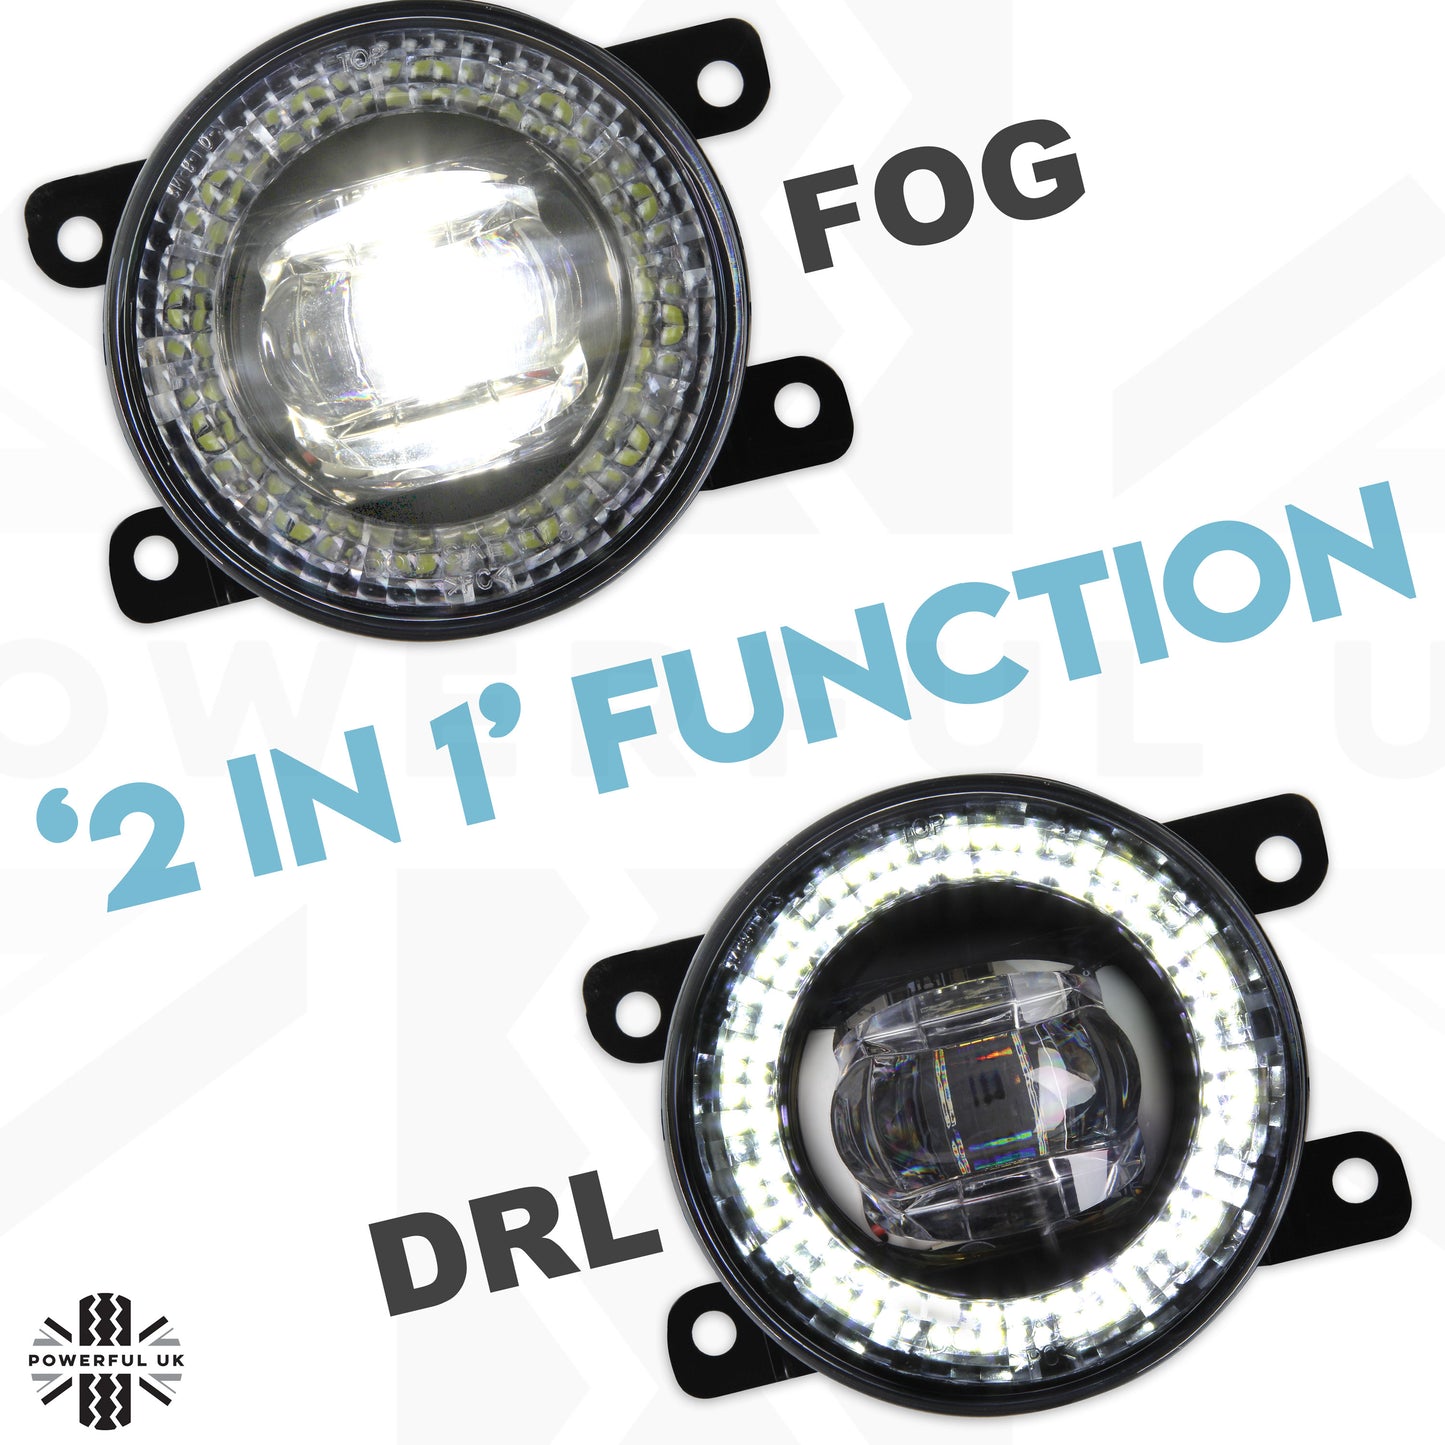 Front Bumper fog & DRL 2 in 1 LED lamps for Land Rover Freelander 2 ( Type 5 )